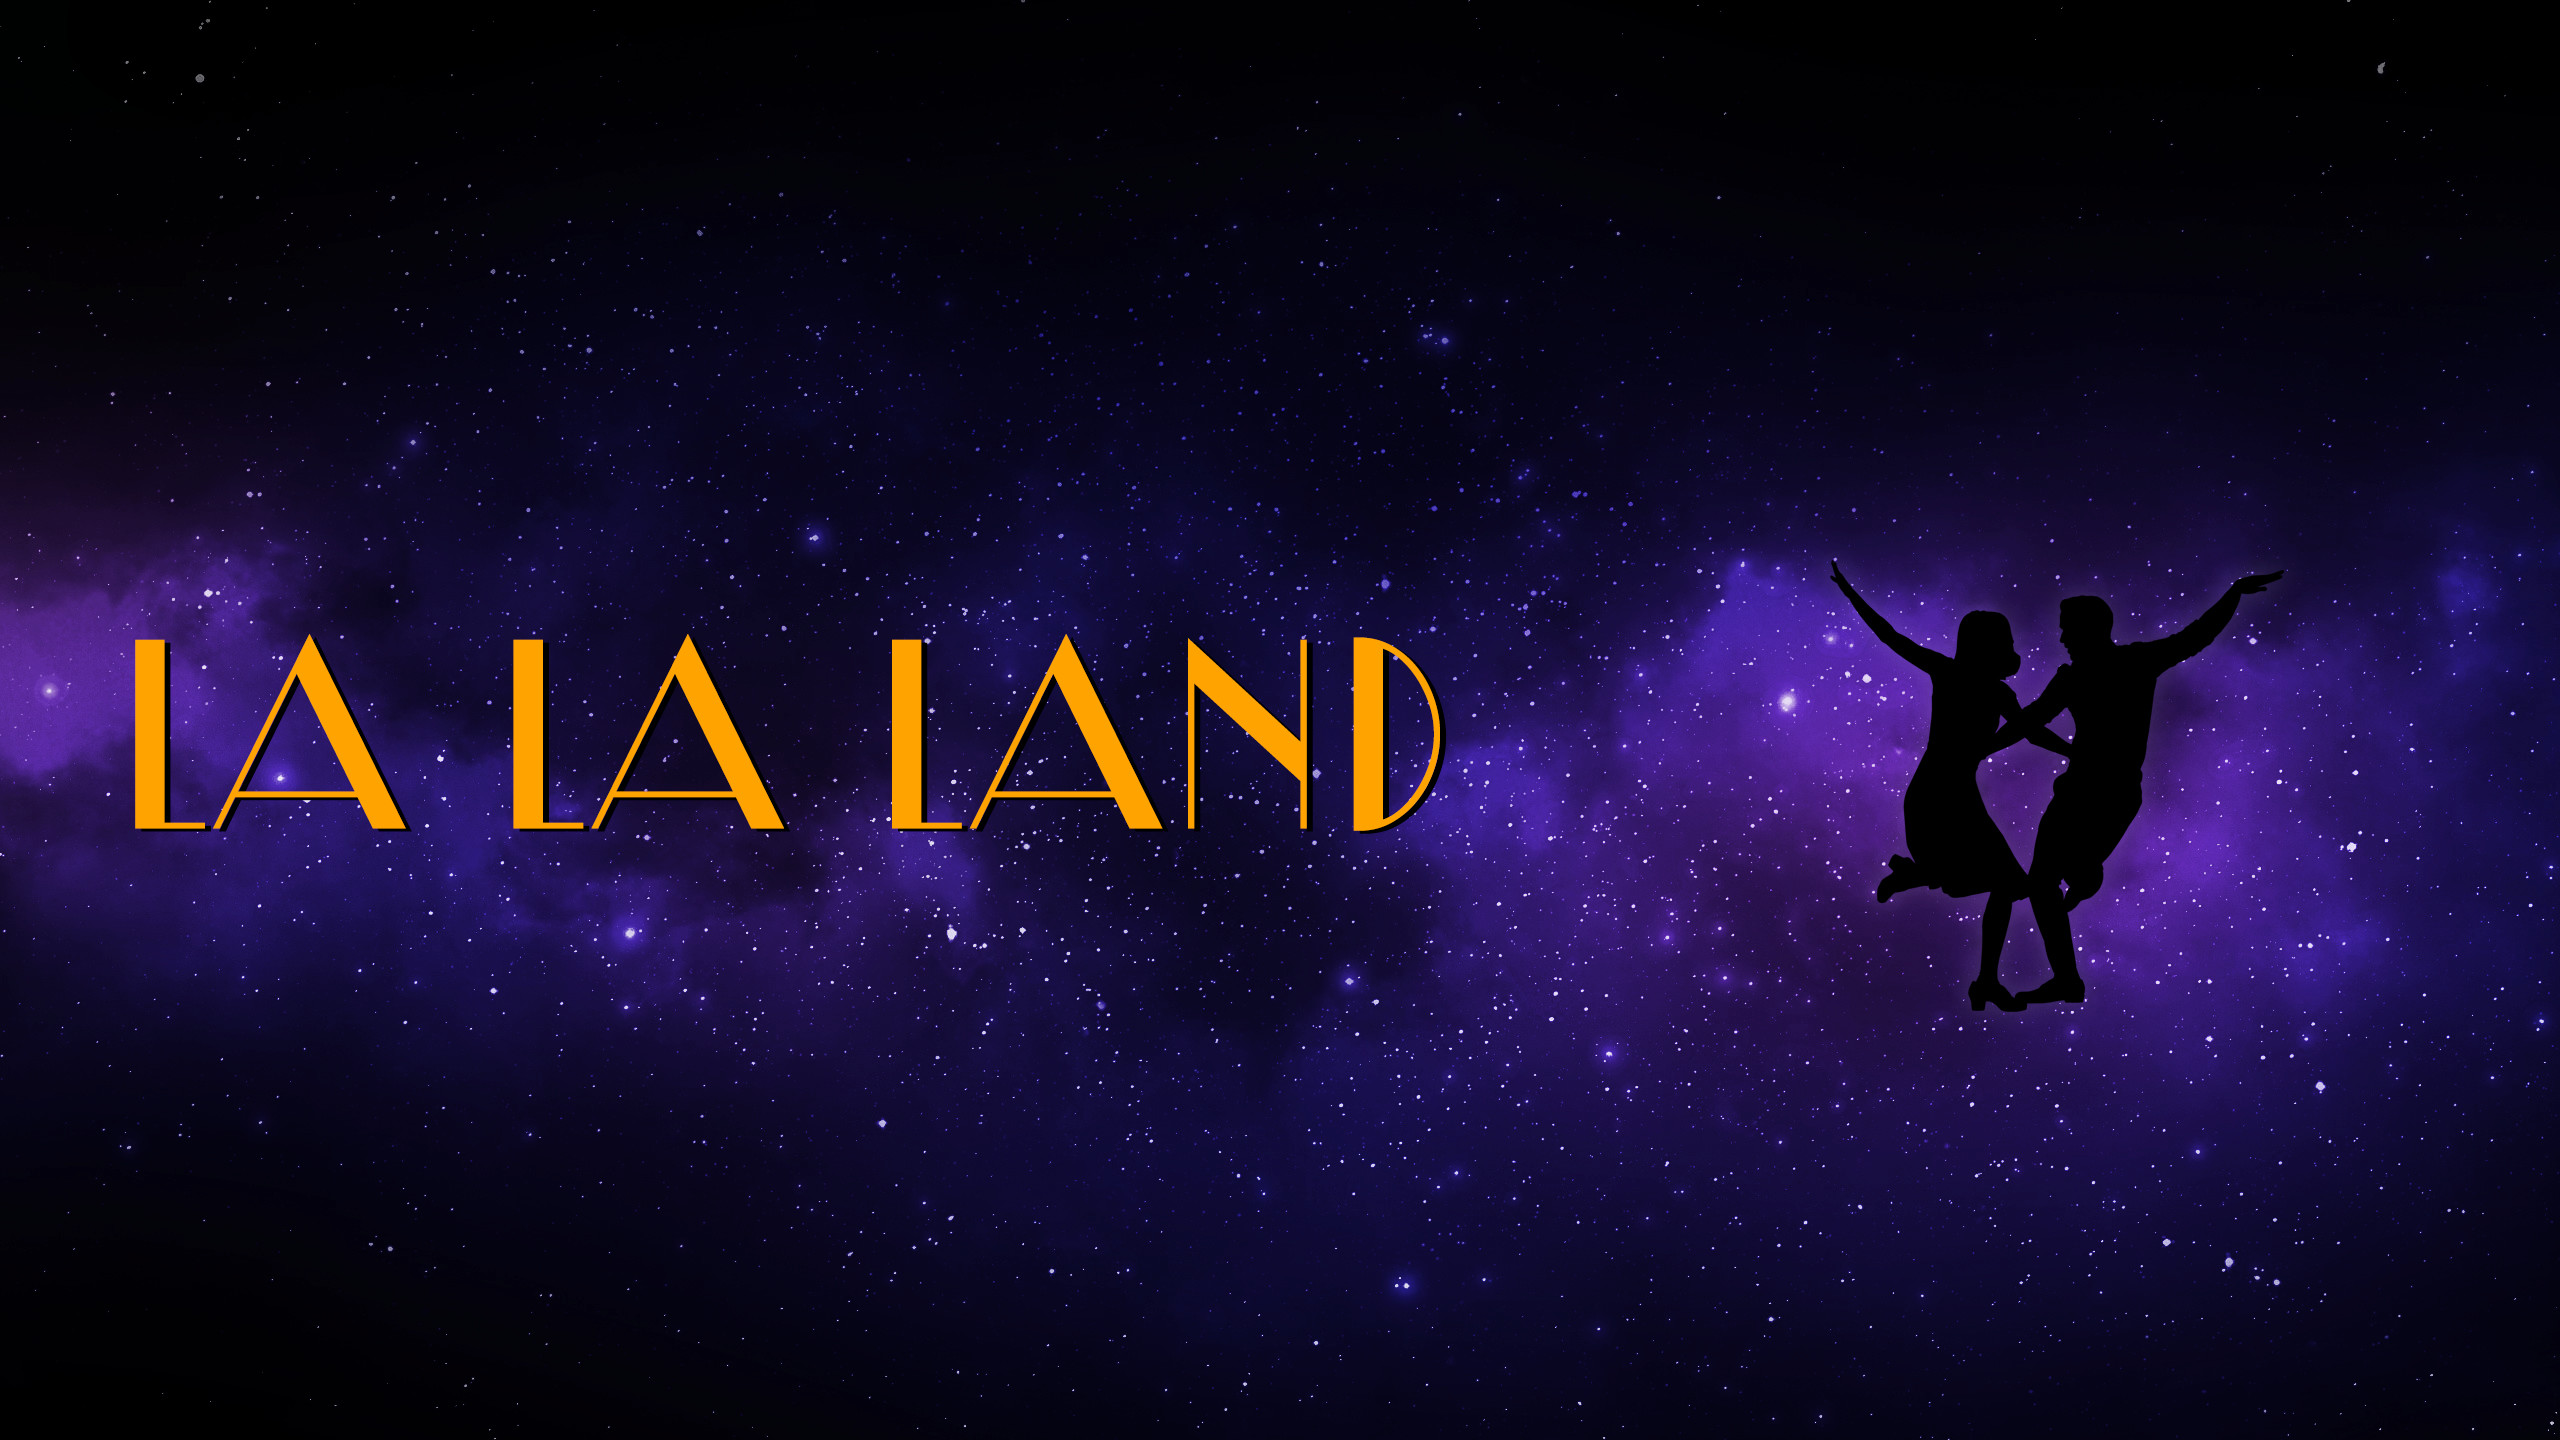 La La Land - CITY OF STARS WALLPAPER DESKTOP (HD+ 1440X900)